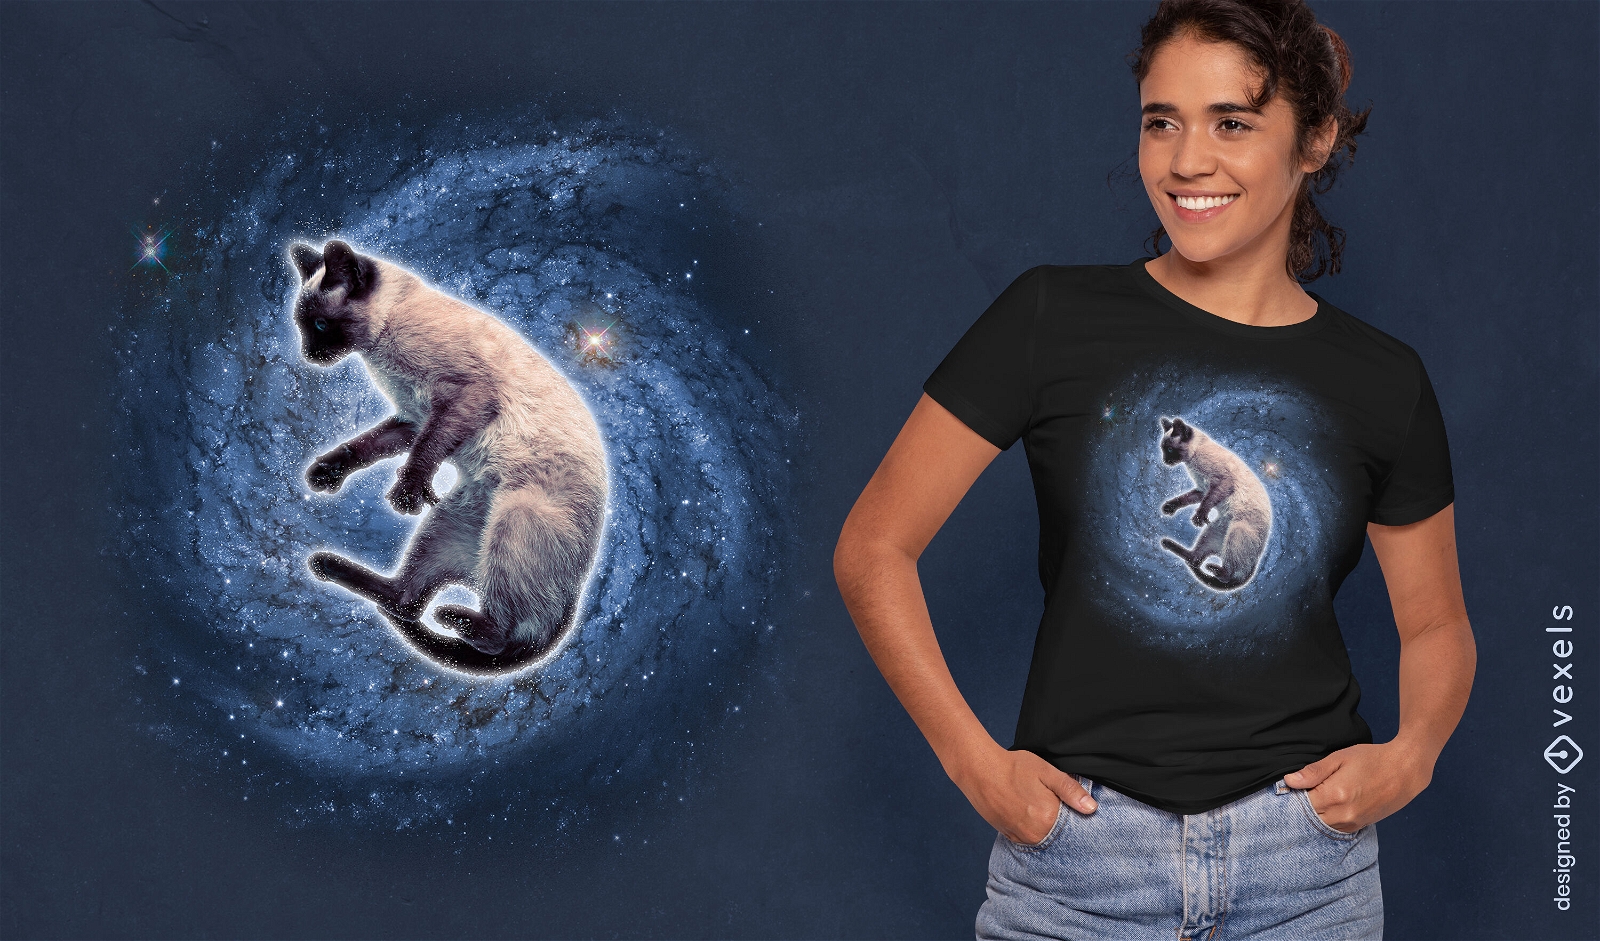 Galaxy cat photographic t-shirt design